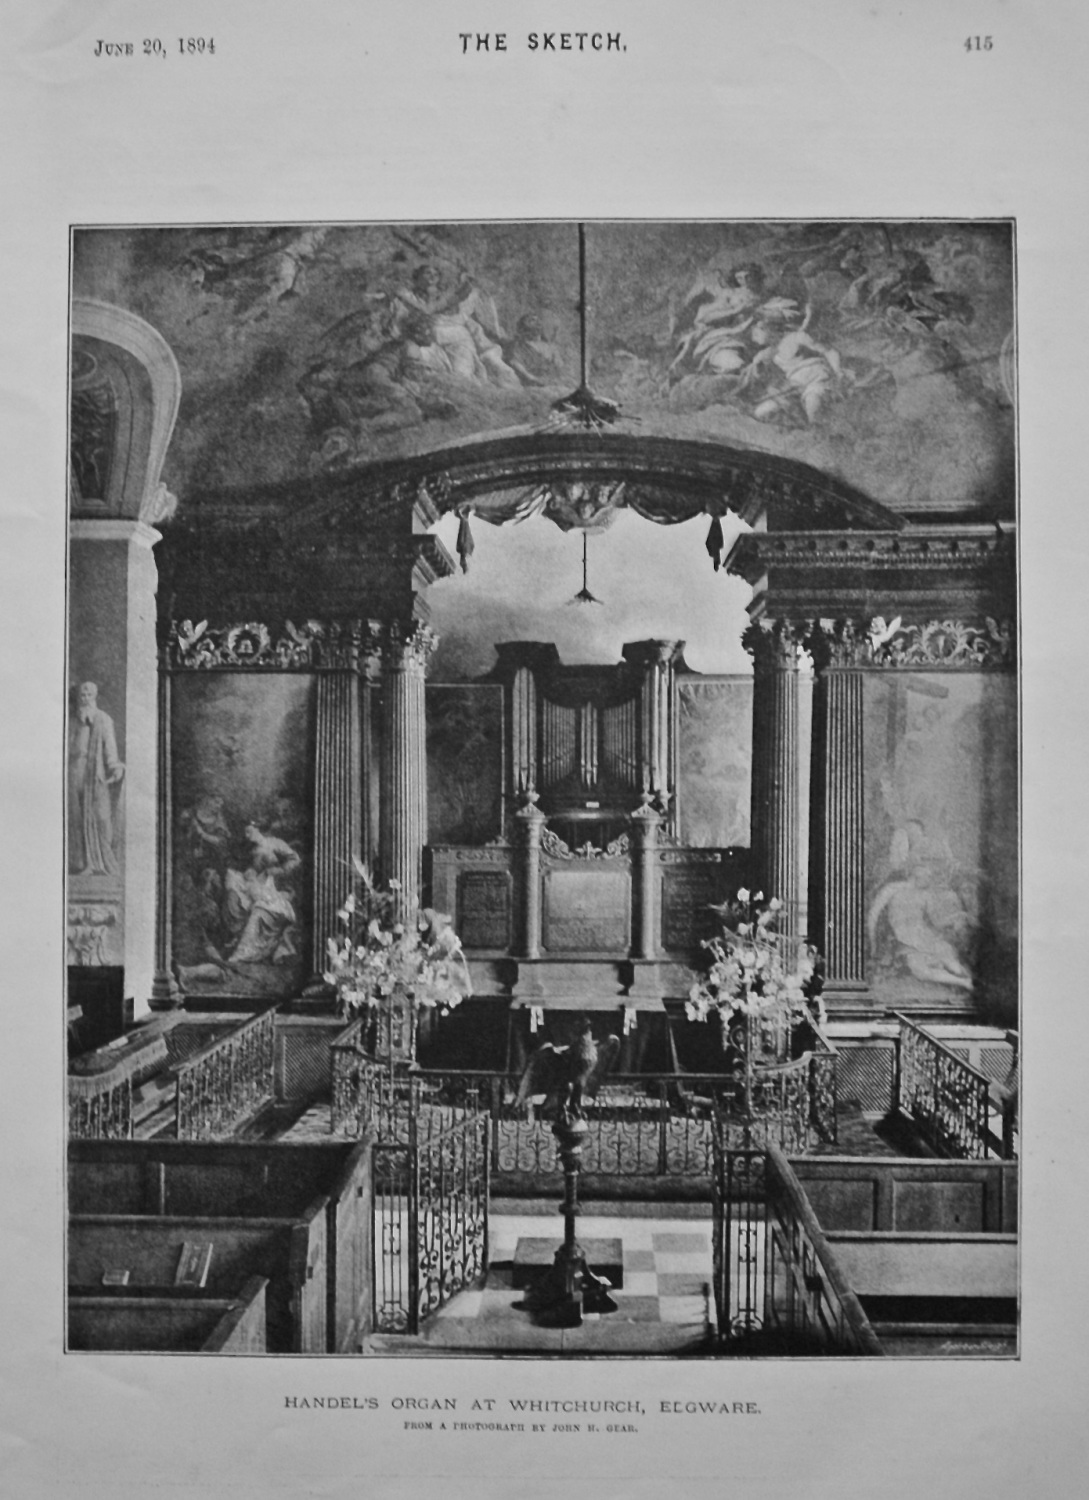 Handel's Organ at Whitchurch, Edgware. 1894.